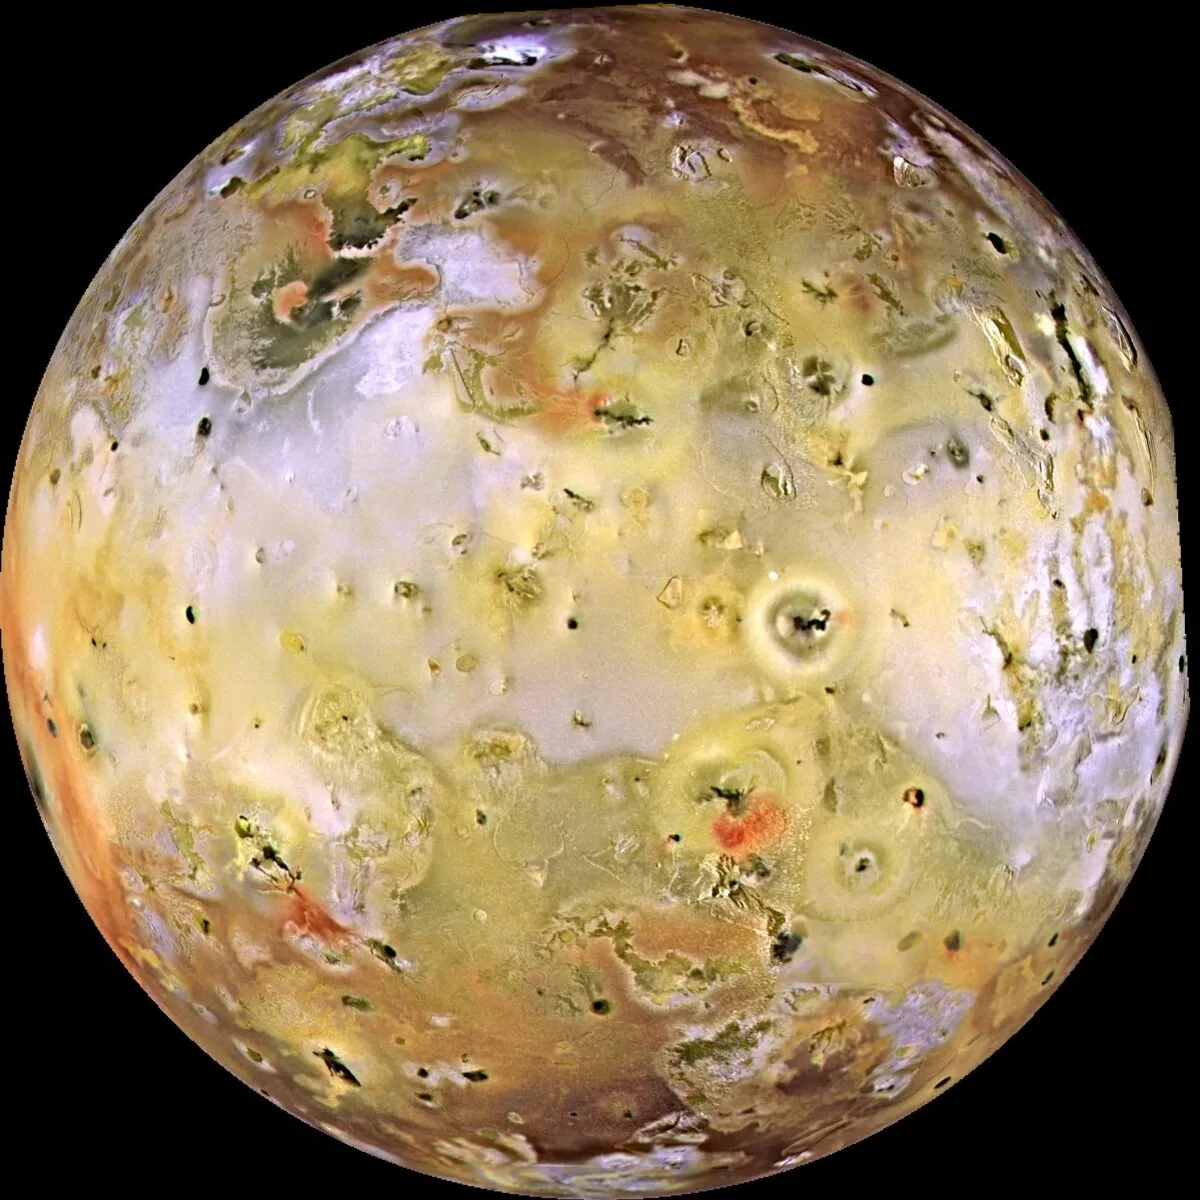 A view of Jupiter's moon Io captured by the Galileo spacecraft. Credit: NASA/JPL/University of Arizona